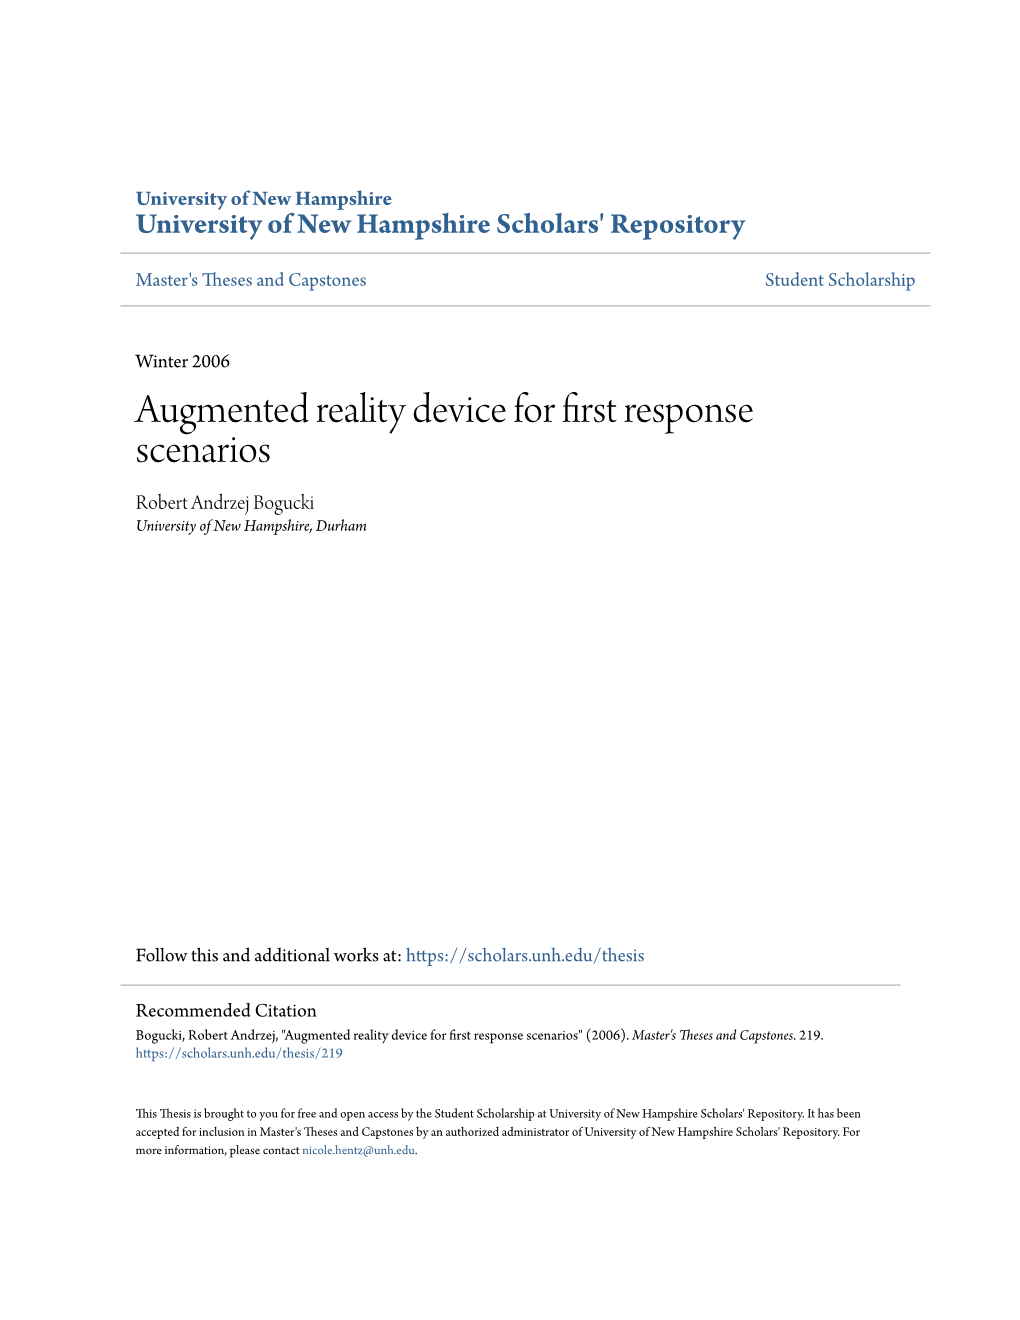 Augmented Reality Device for First Response Scenarios Robert Andrzej Bogucki University of New Hampshire, Durham